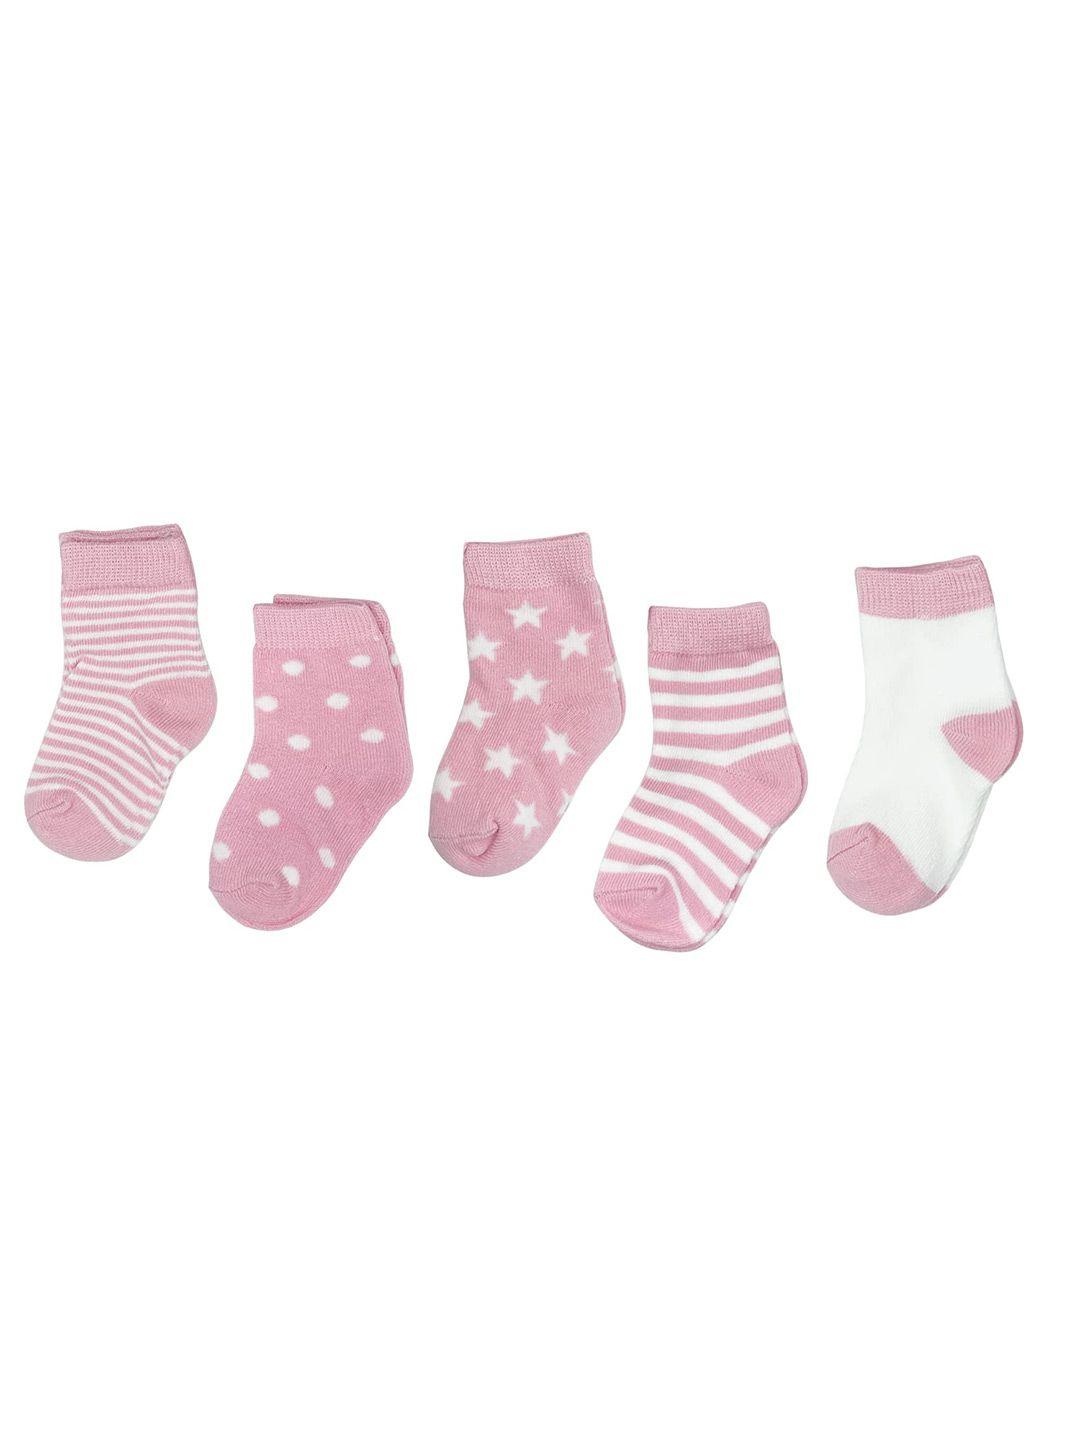 syga kids pack of 5 patterned cotton ankle-length socks